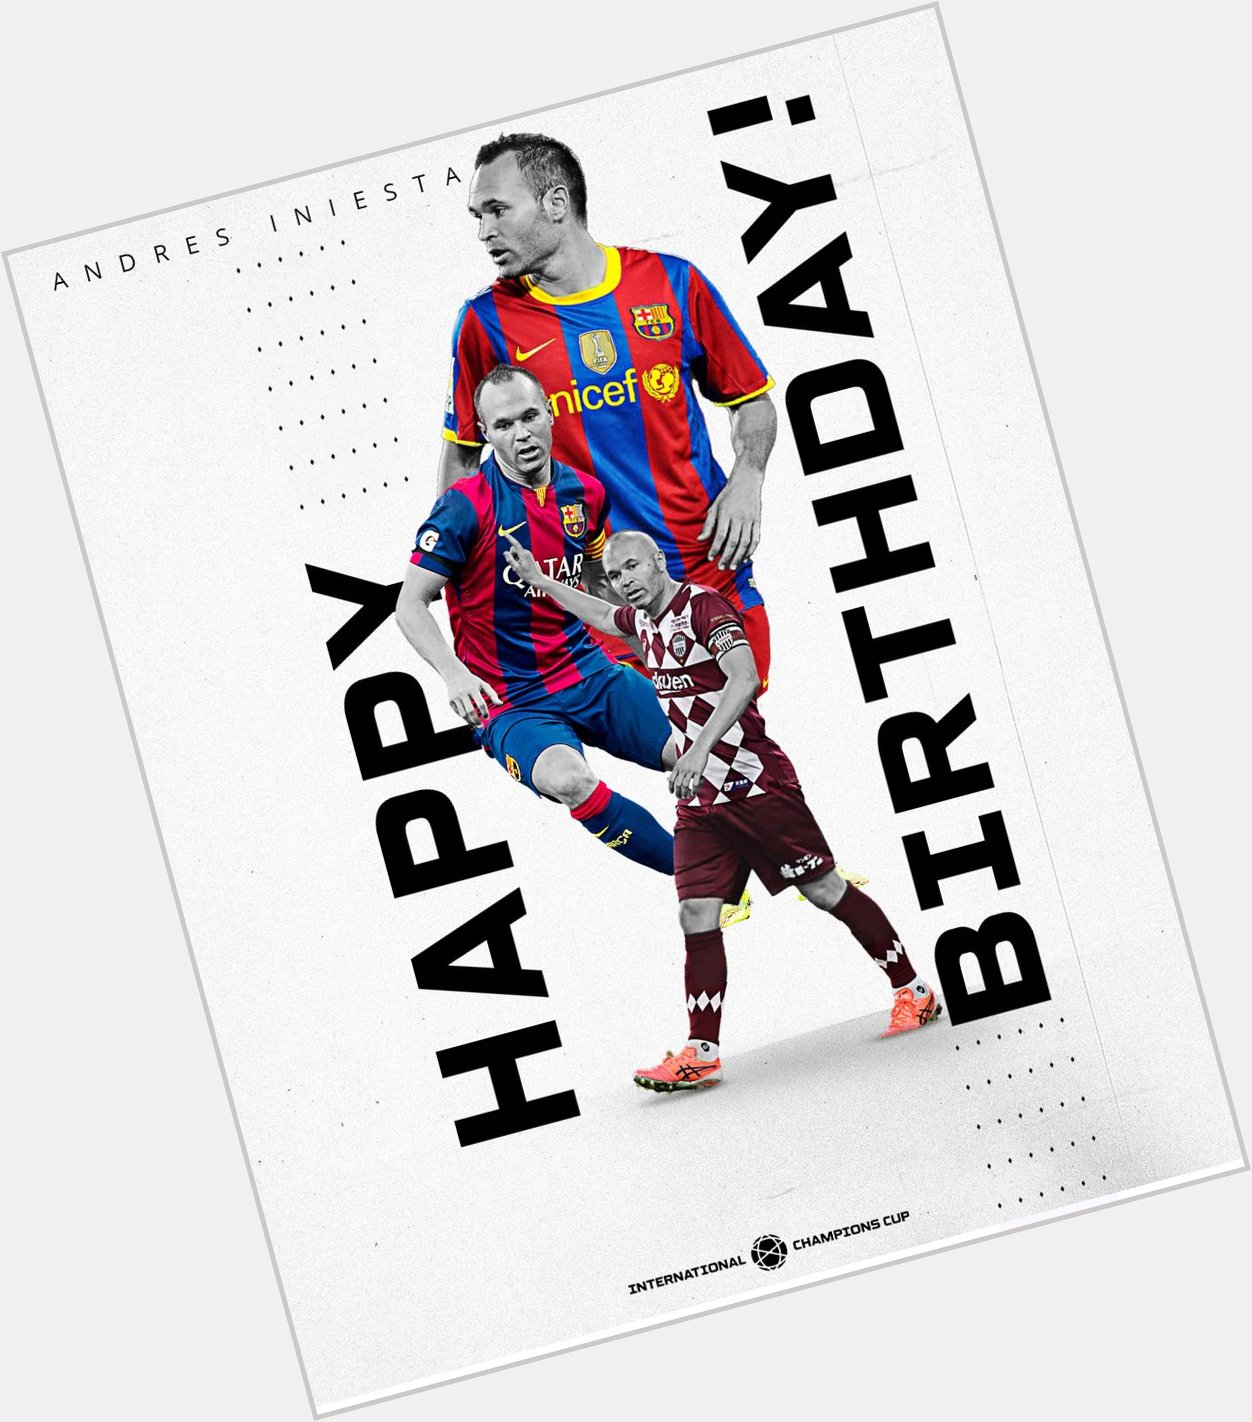 Happy 37th birthday to the midfielder Andrés Iniesta 